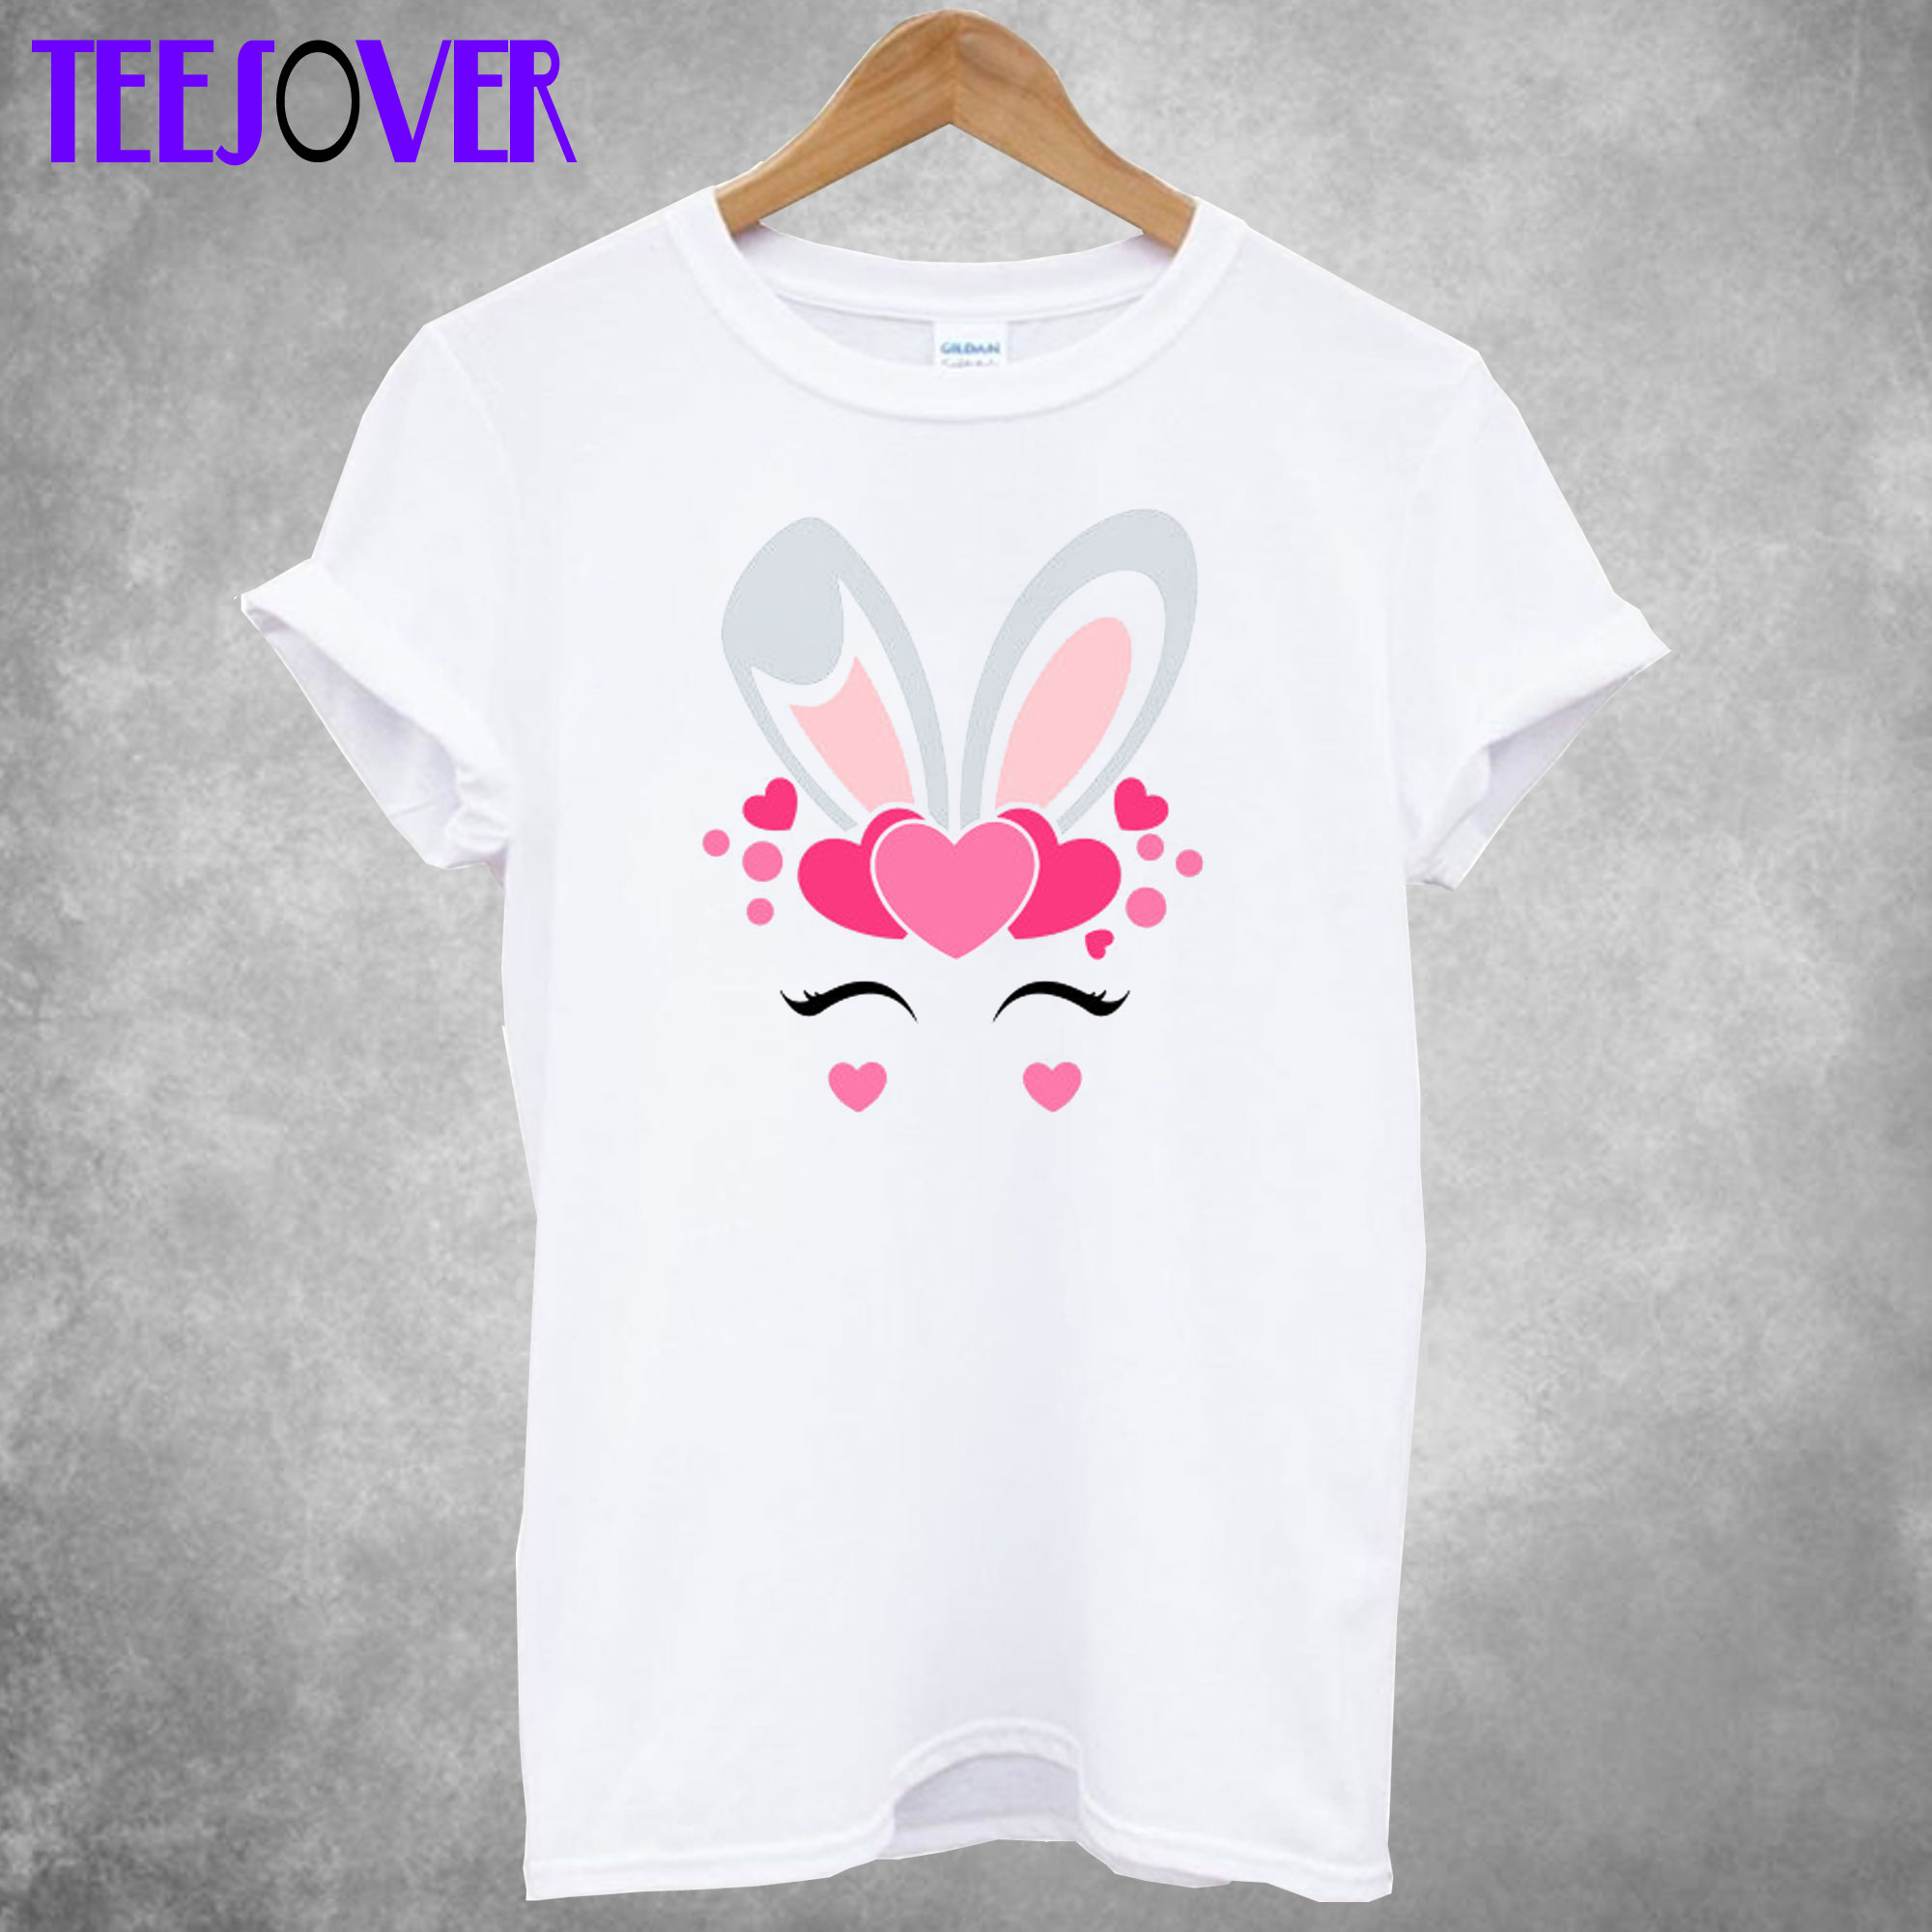 Cute Easter Unicorn Bunny Face T-Shirt